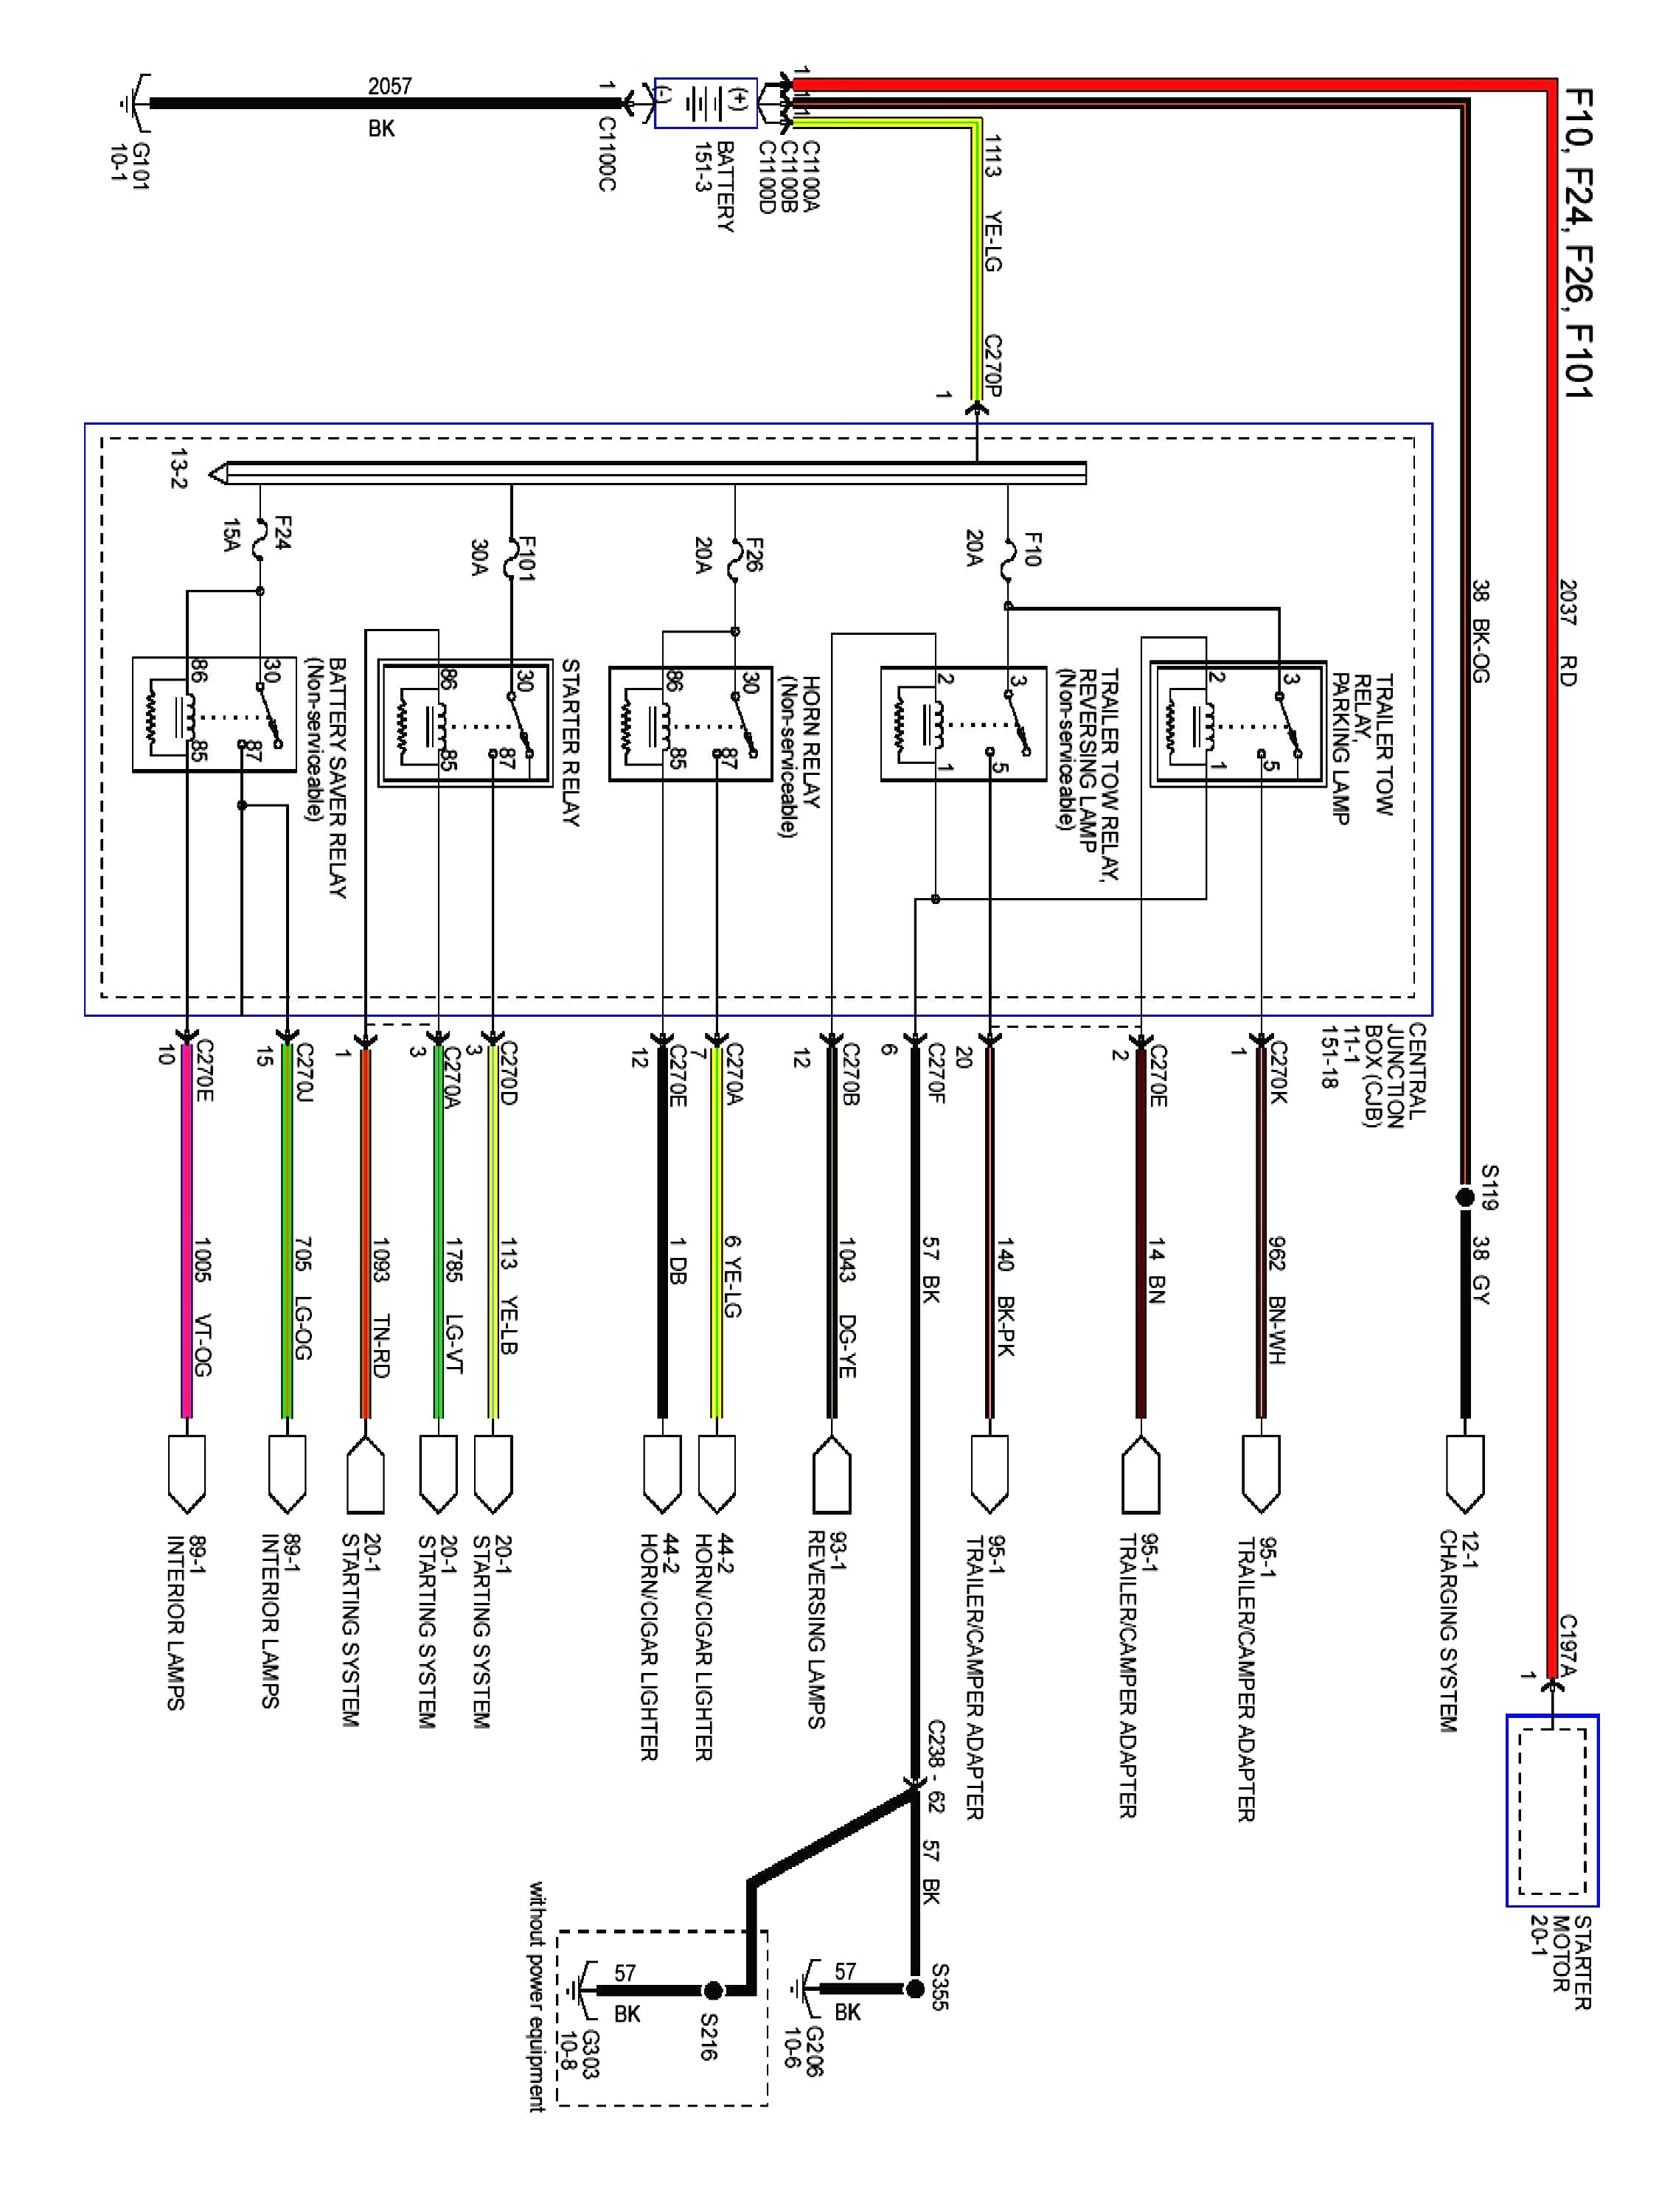 1993 mustang gt wiring diagram schema diagram database wiring diagram 1993 ford mustang hatchback rear